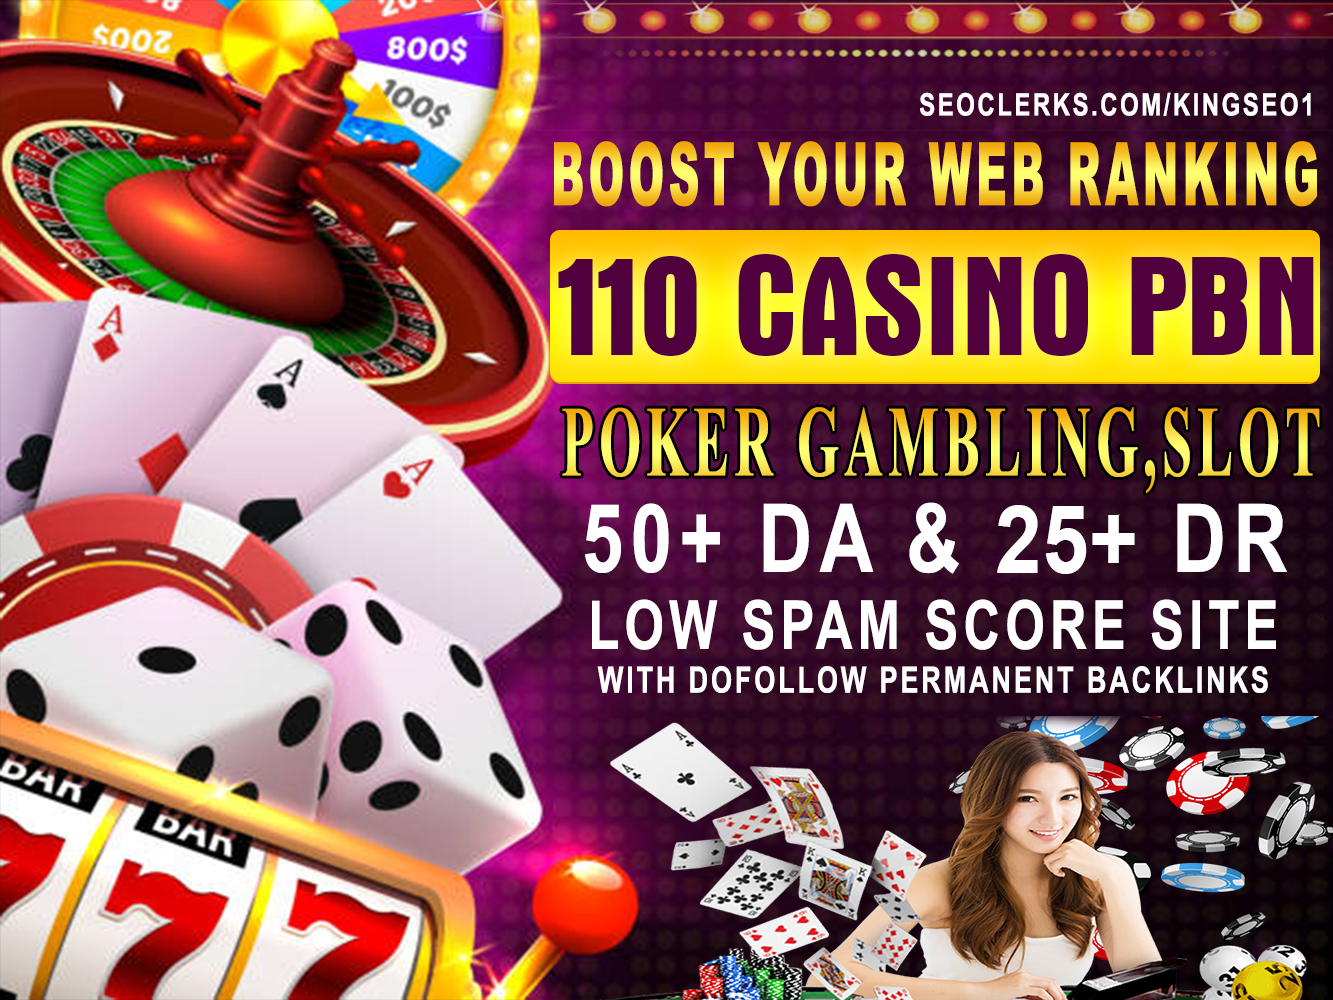 Black Friday Sale 200 PBN Casino Poker Gambling high DA 55+ DR 25+ Low Spam, Dofollow Backlinks 